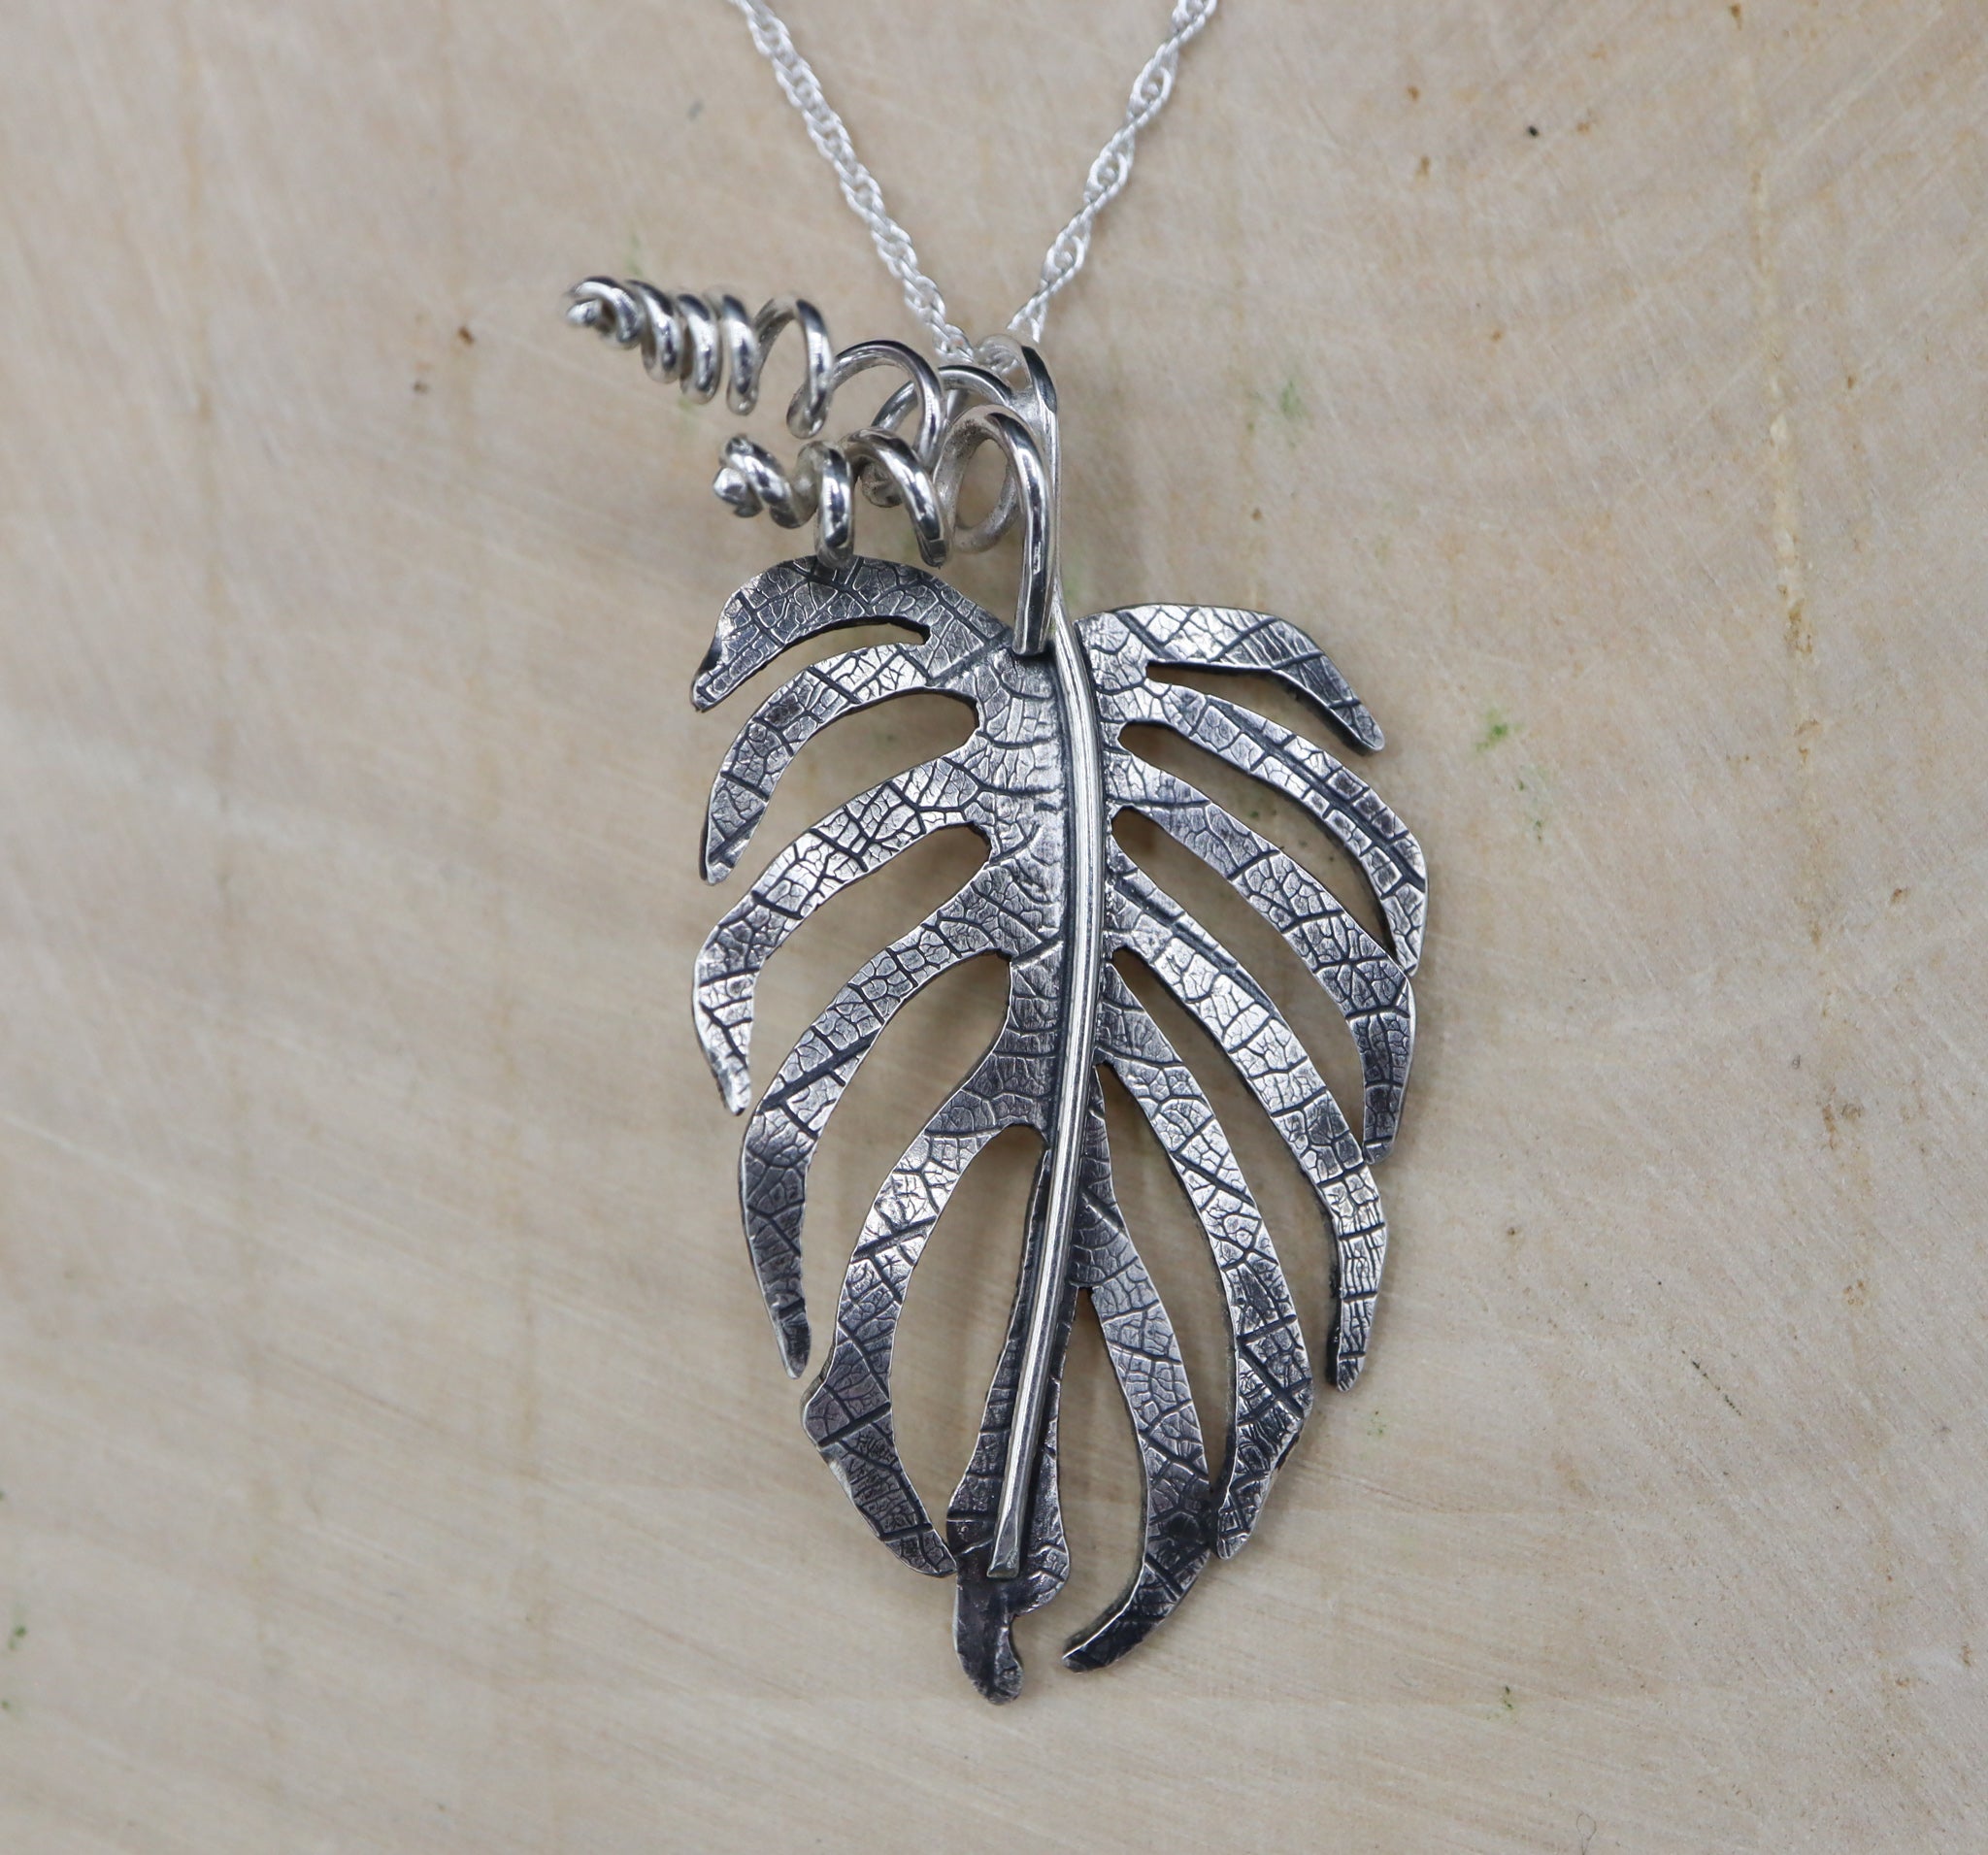 A handmade sterling silver monstera sierrana necklace. 